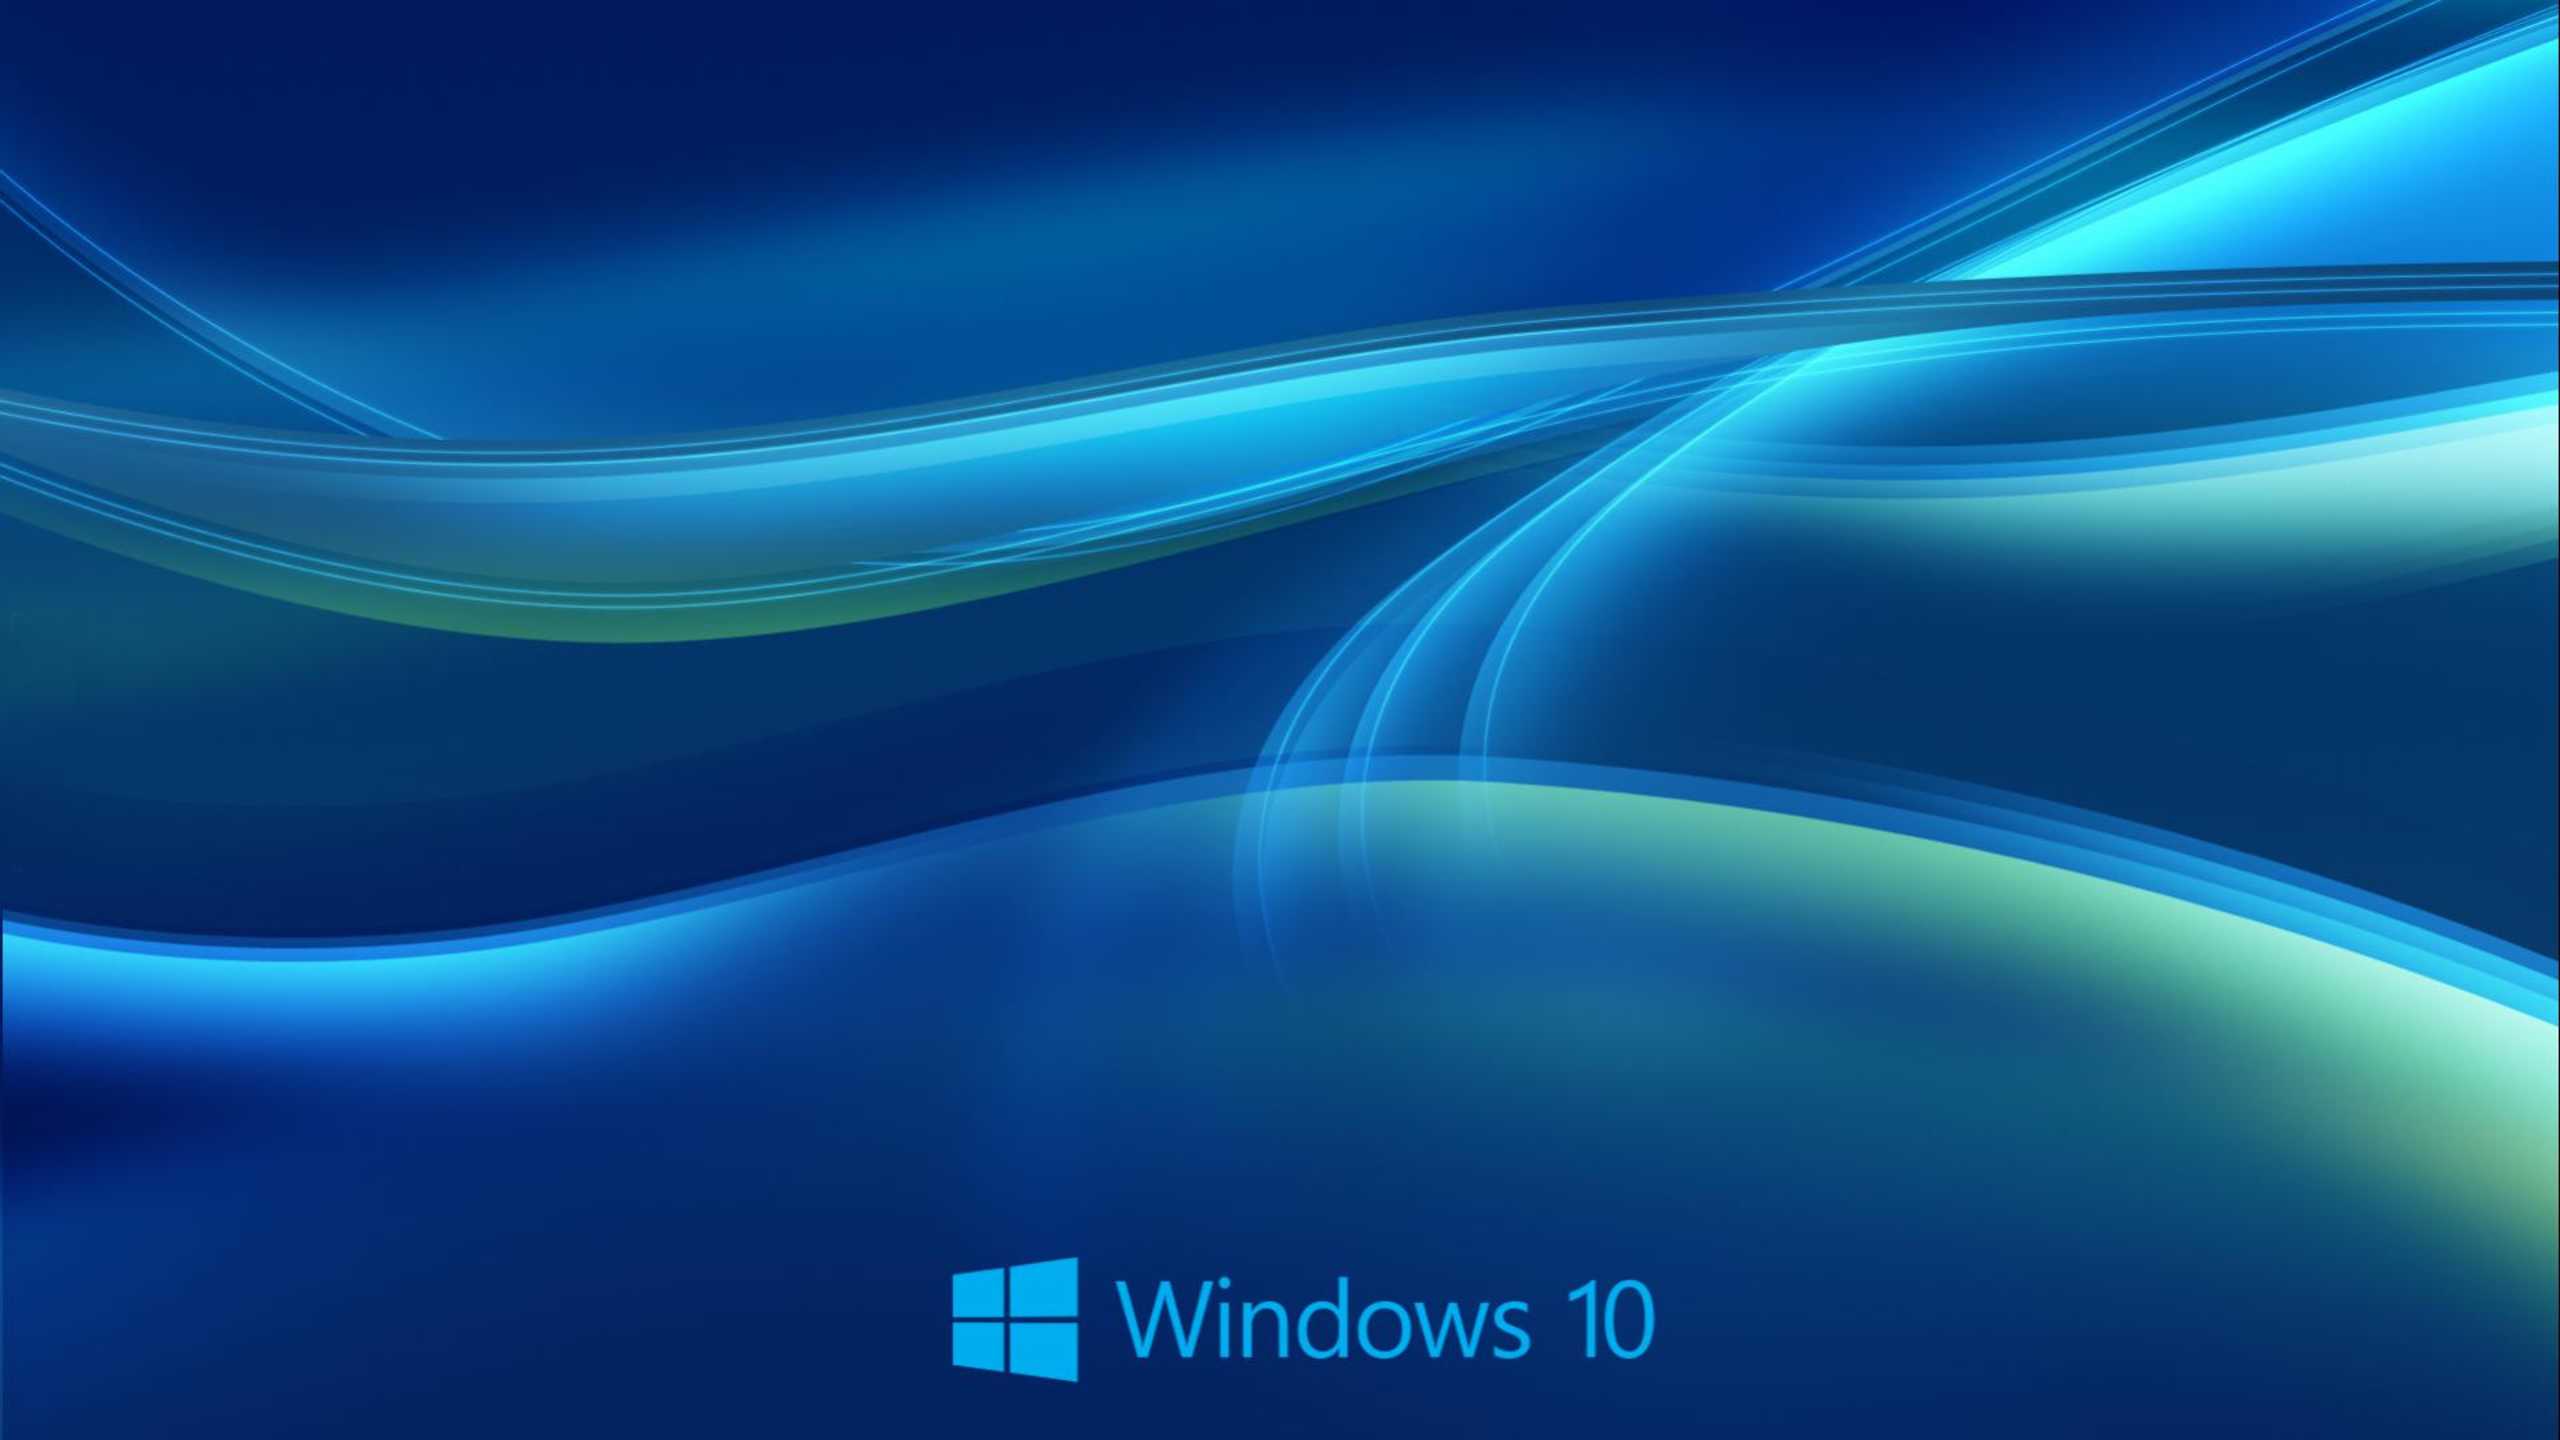 46 2560x1440 Wallpaper Windows 10 On Wallpapersafari